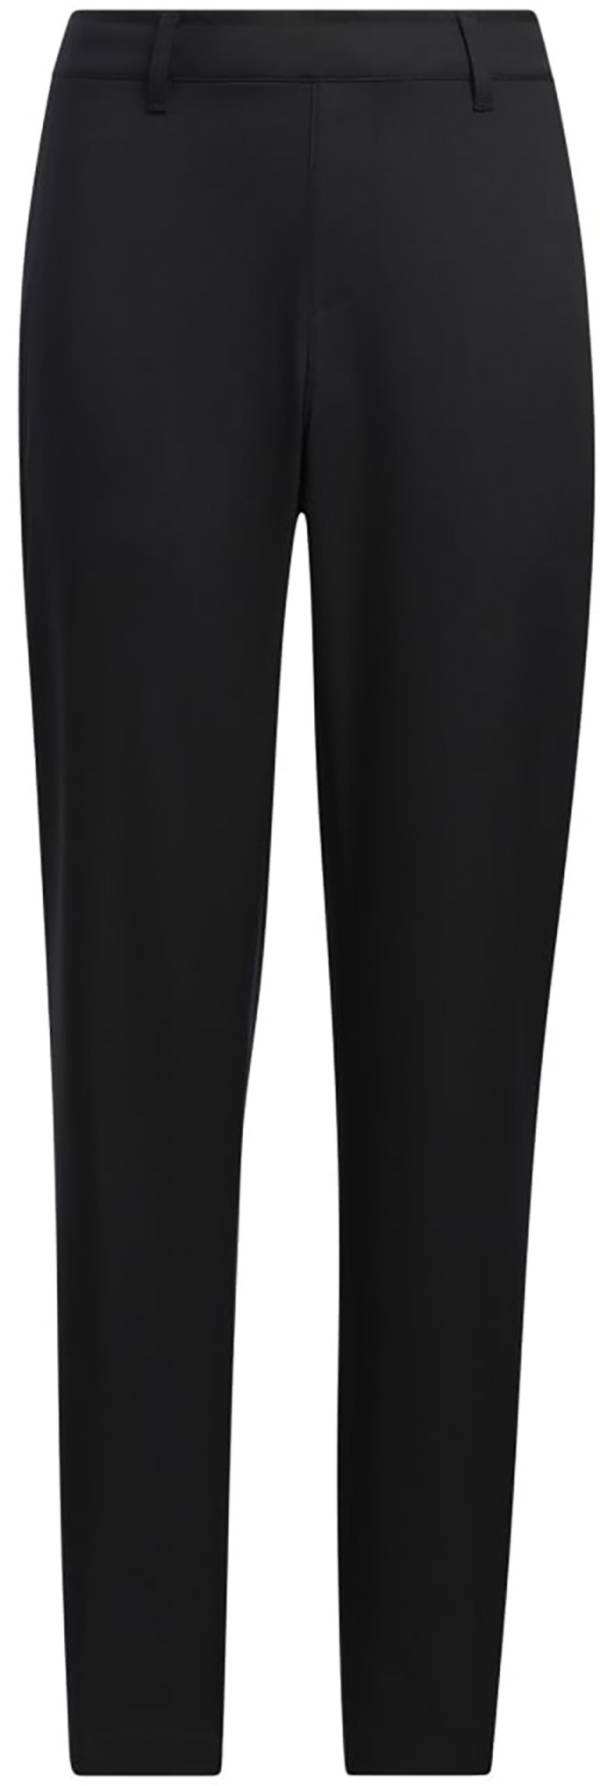 adidas Boys' Ultimate365 Adjustable Golf Trousers product image